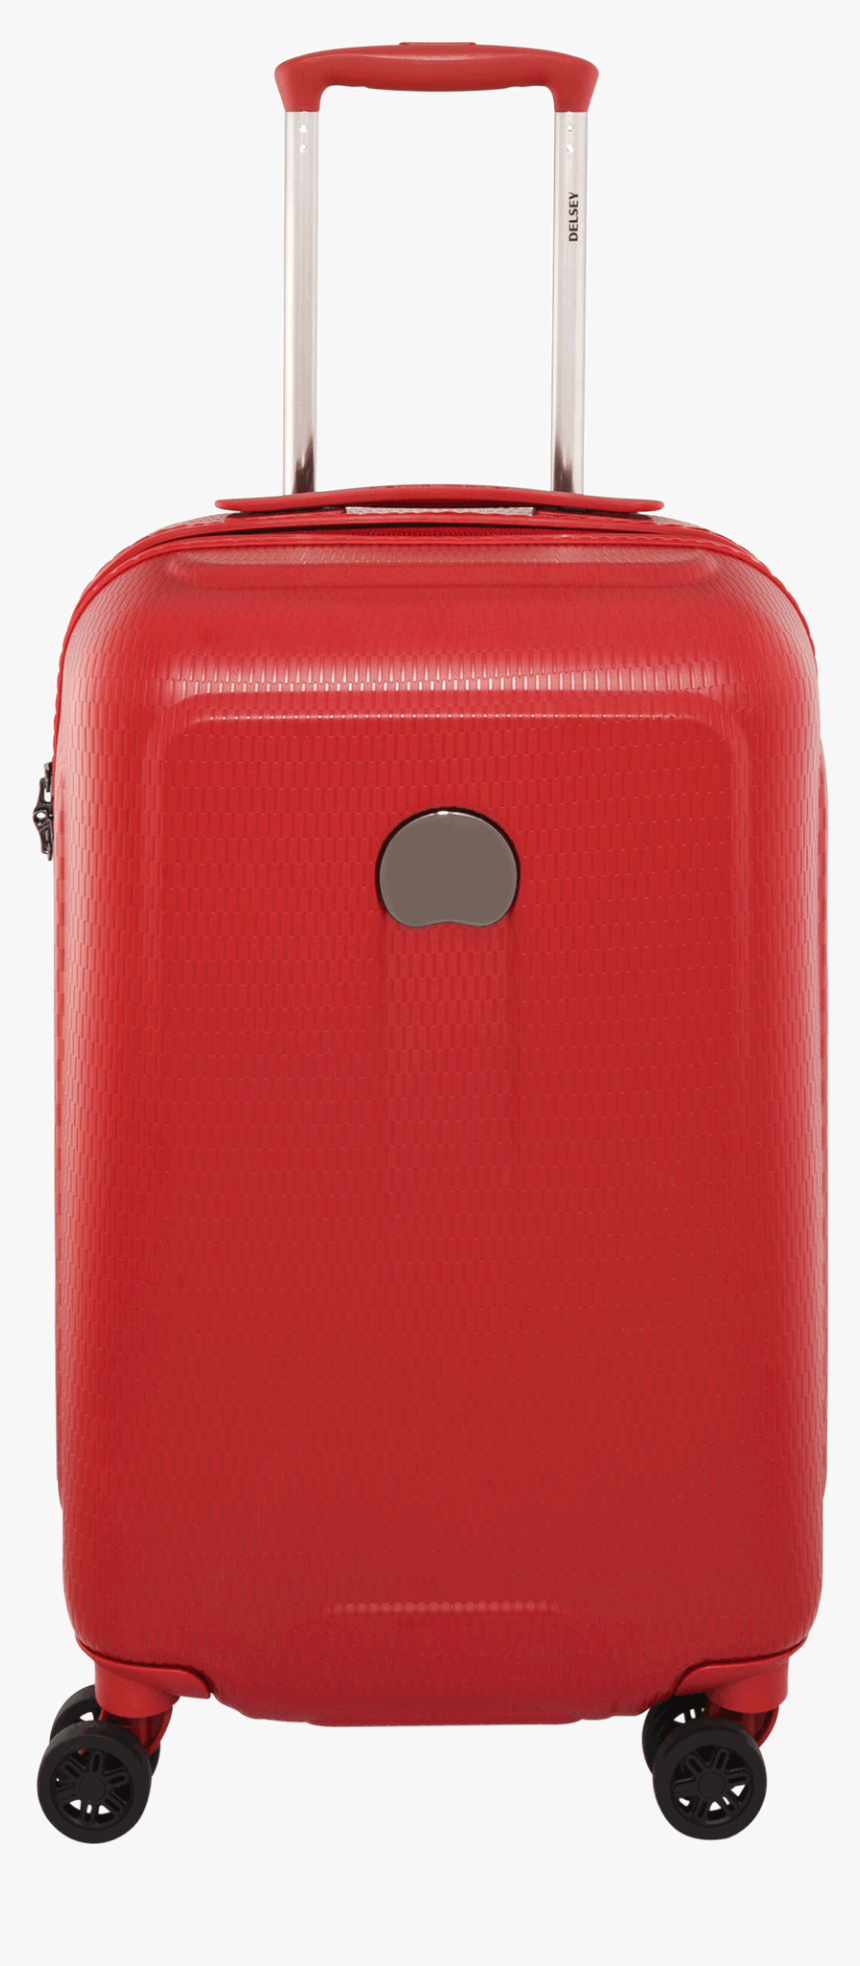 Pink Luggage Png Image - Luggage Bag 7 Kg, Transparent Png, Free Download